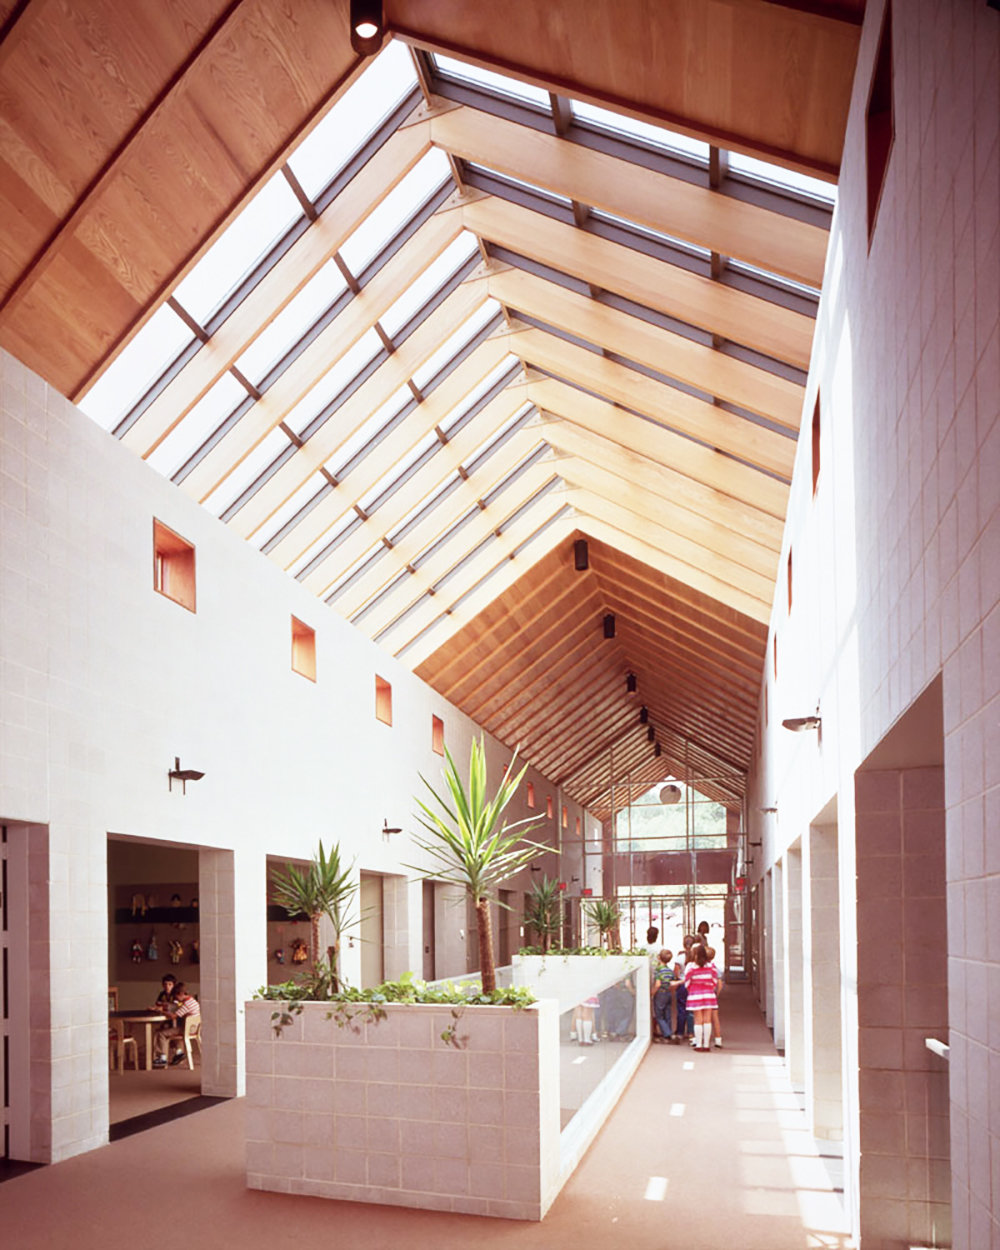 9 tskp middlebury middlebury elementary school interior detail of balcony with skylights central hallway 1400 xxx q85